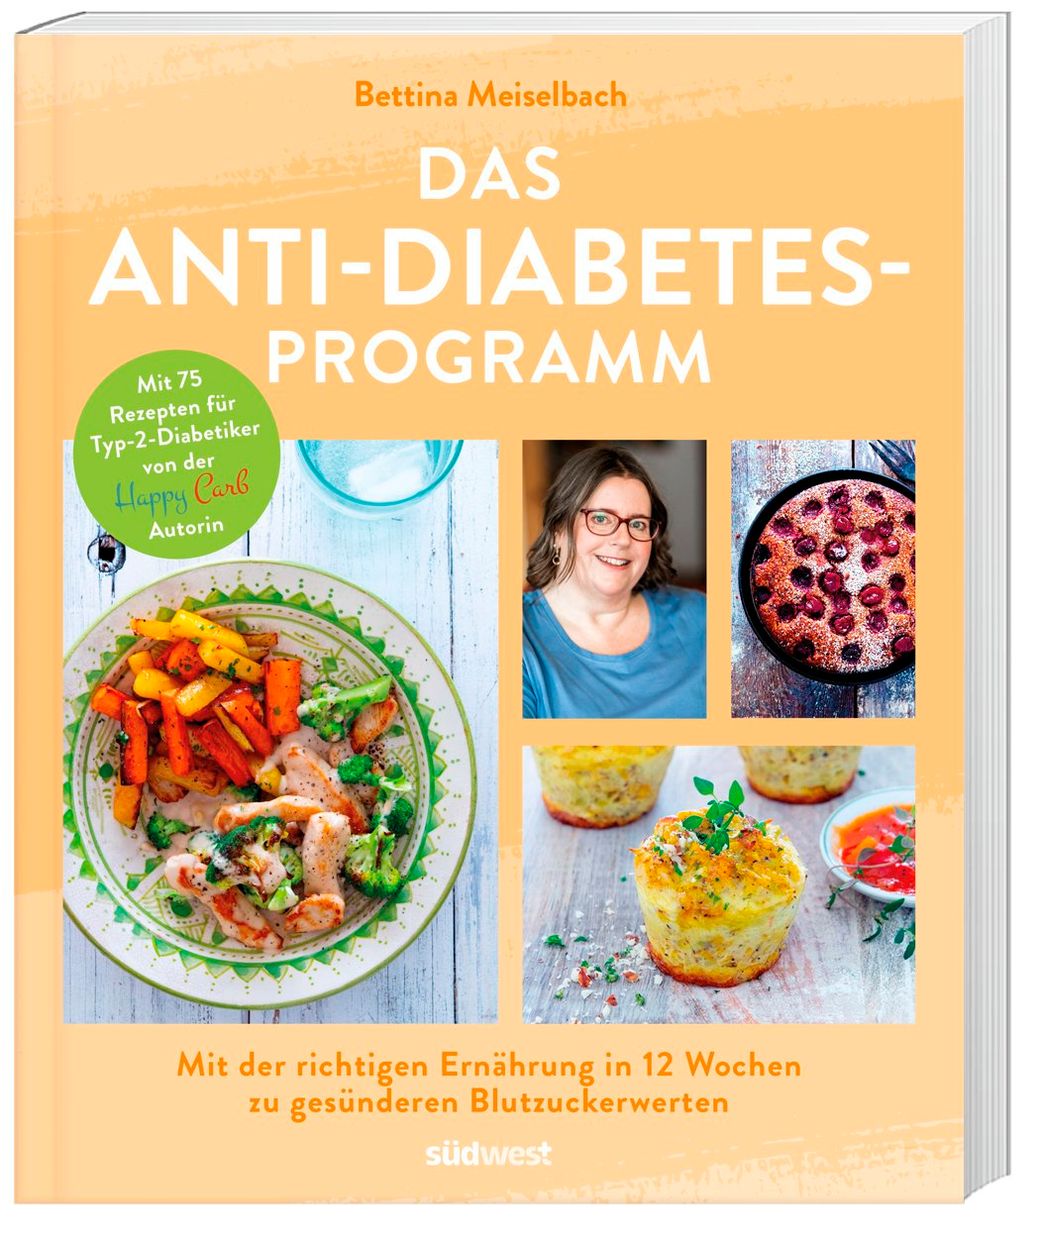 Das Anti-Diabetes-Programm online kaufen - Orbisana